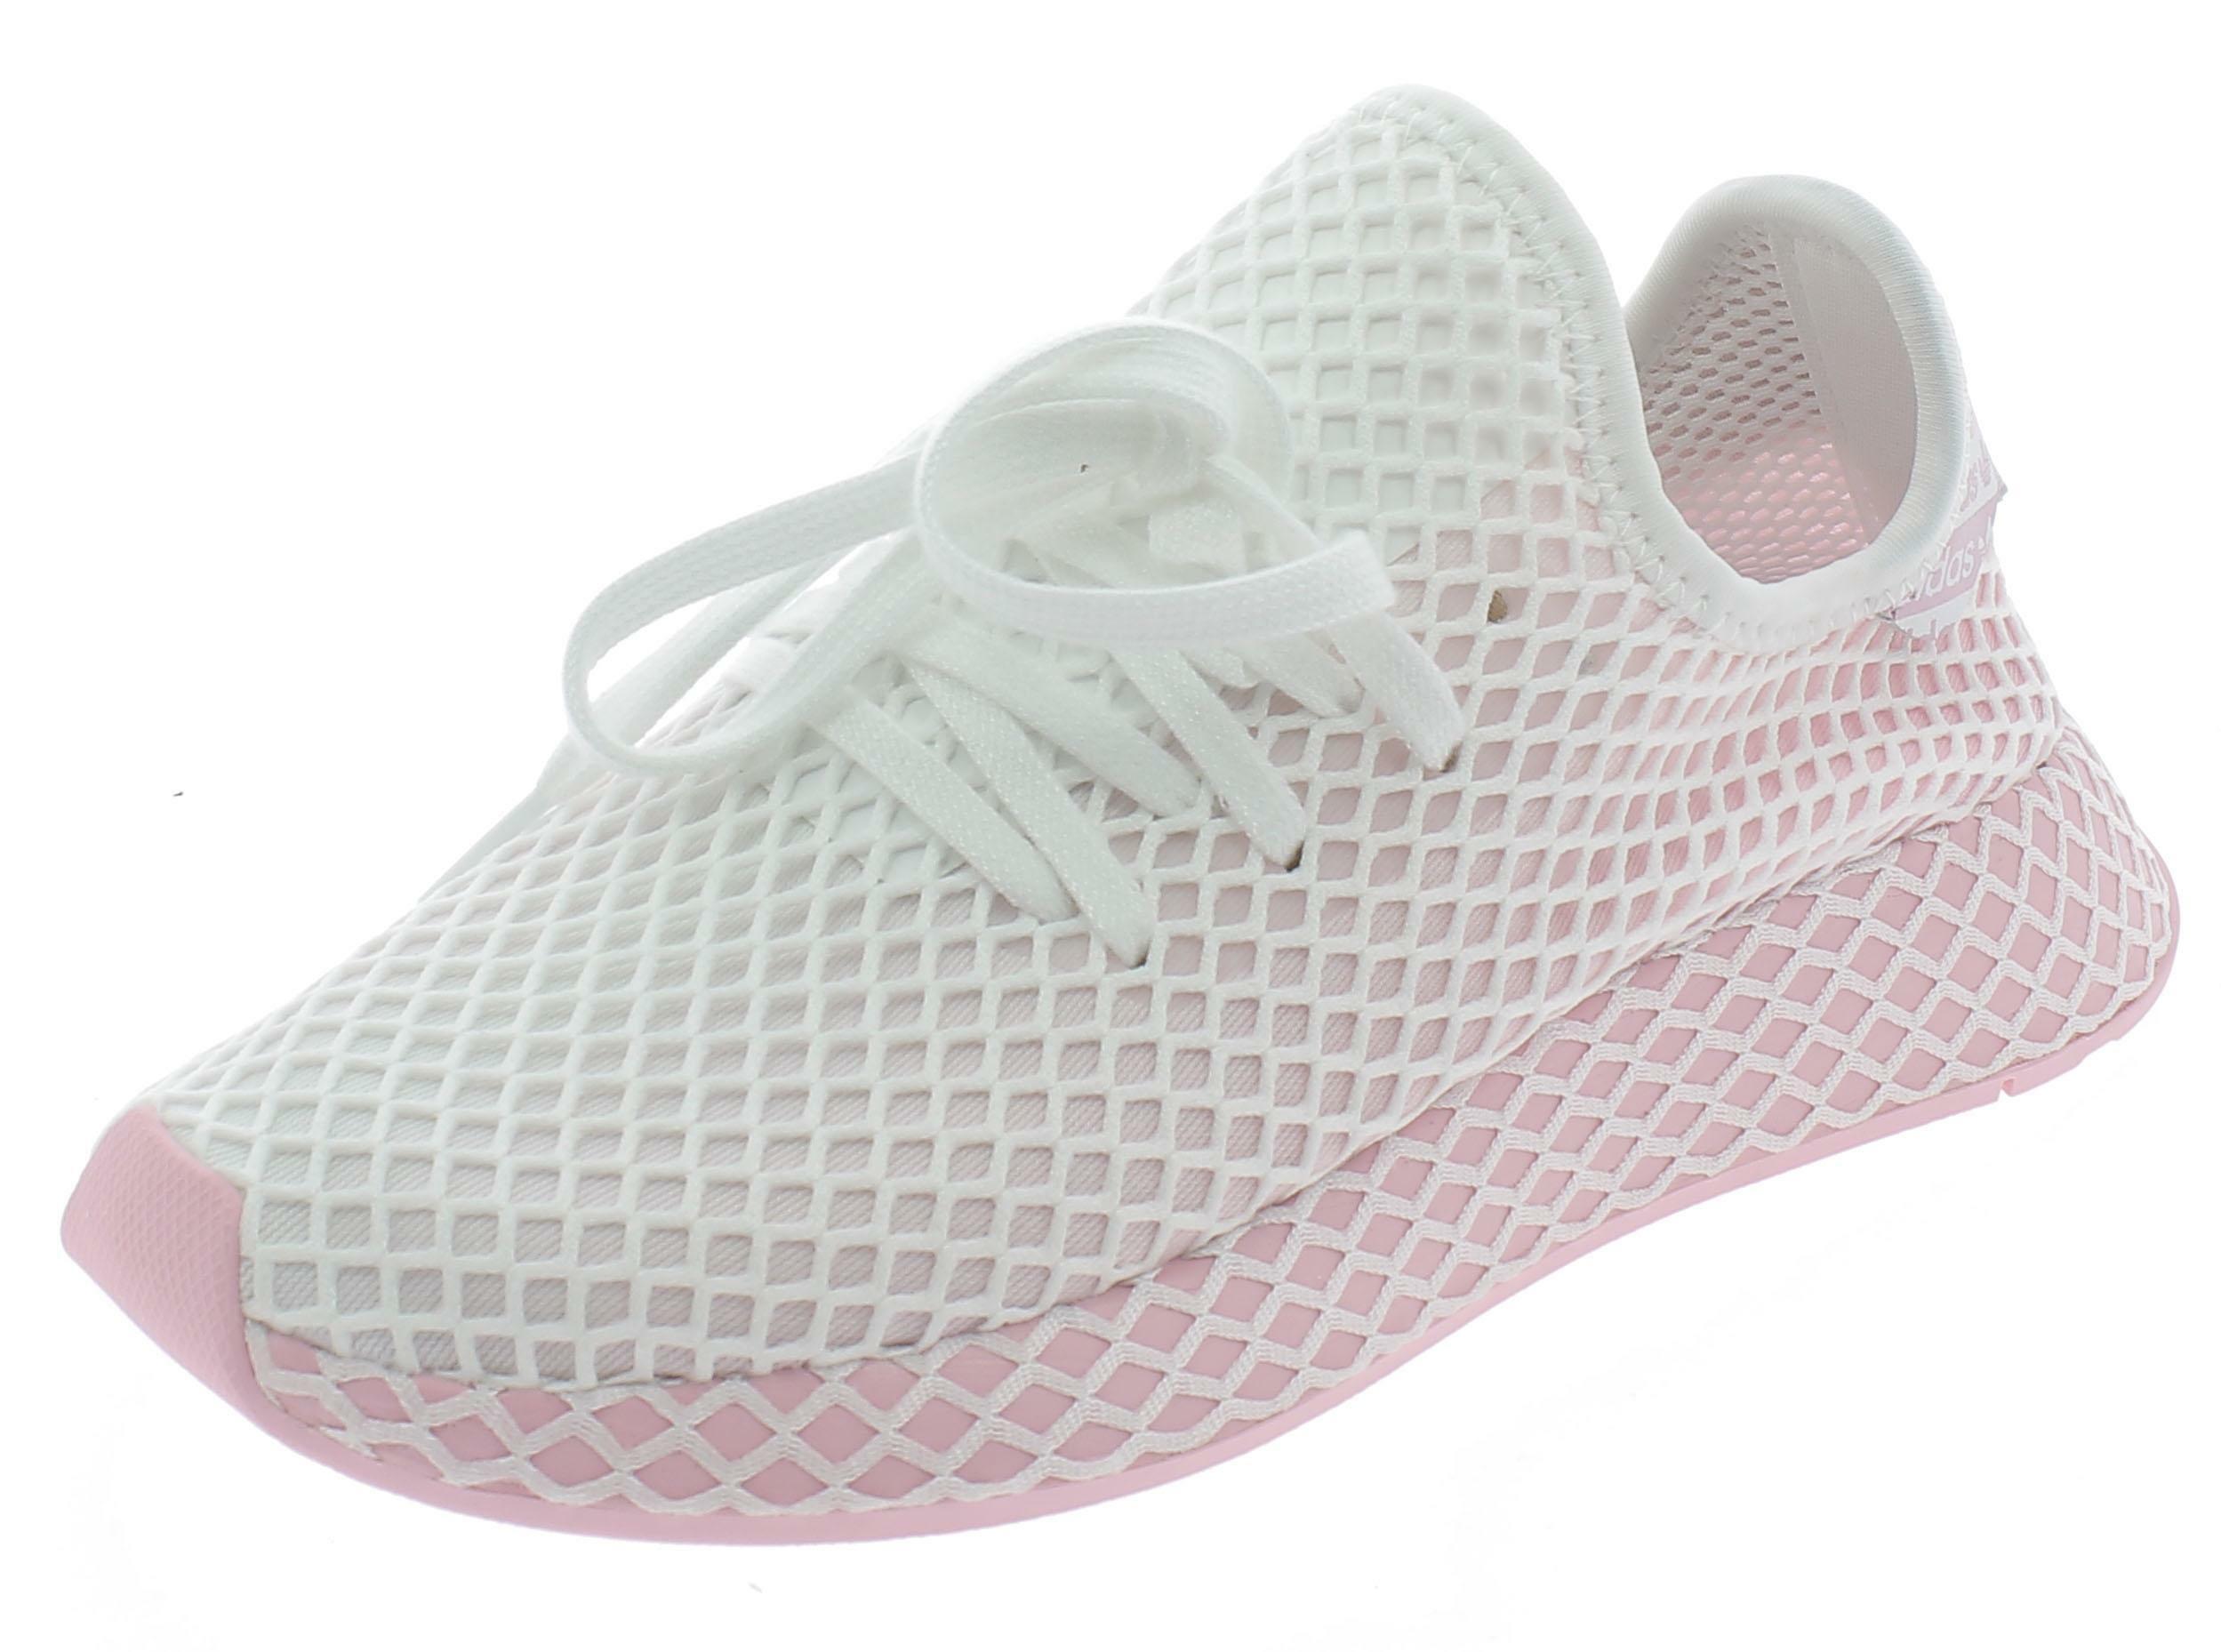 Adidas deerupt scarpe sportive donna rosa eg5368